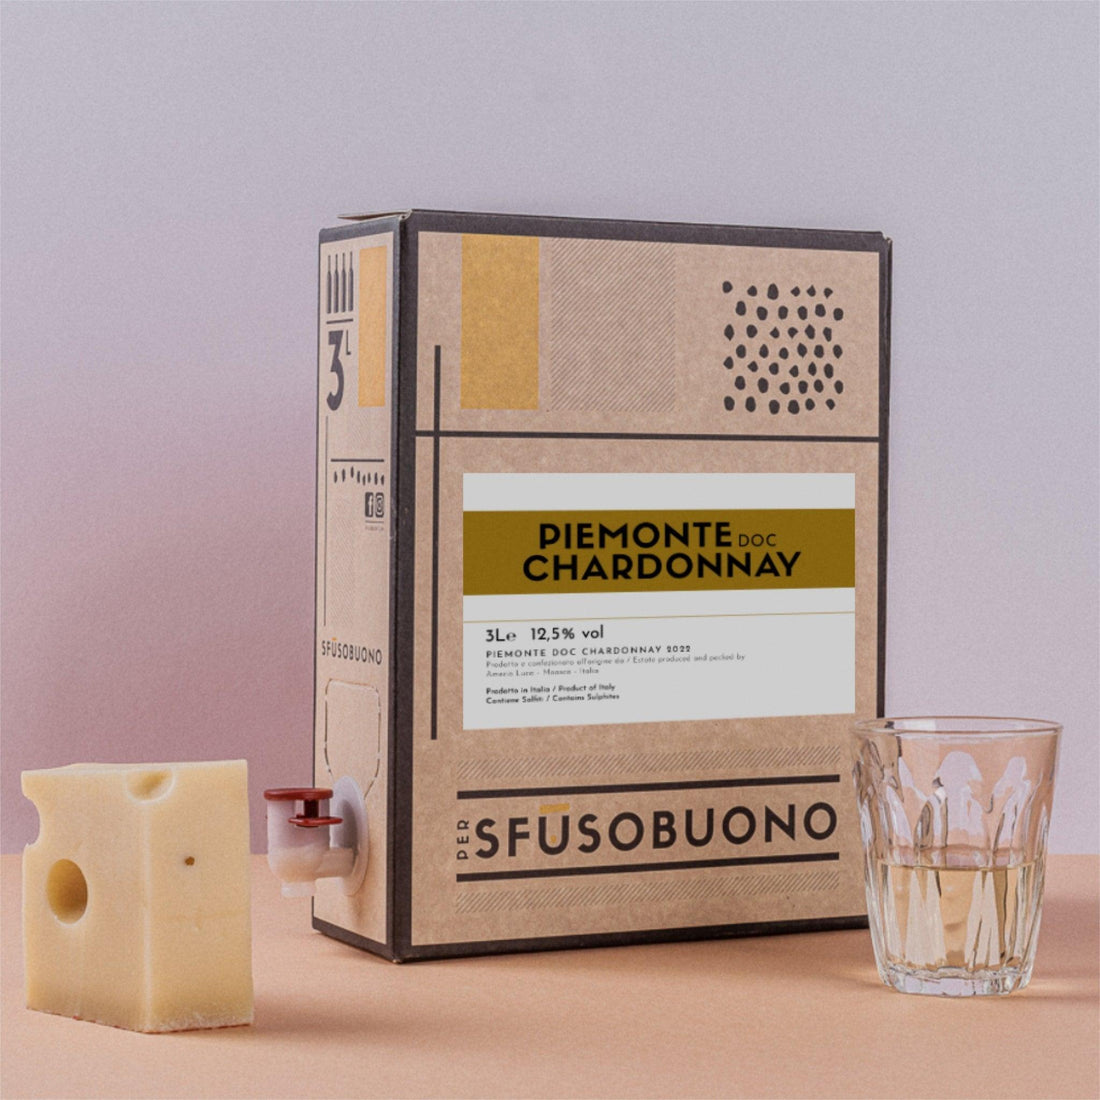 Chardonnay Piedmont 3L - Sfusobuono